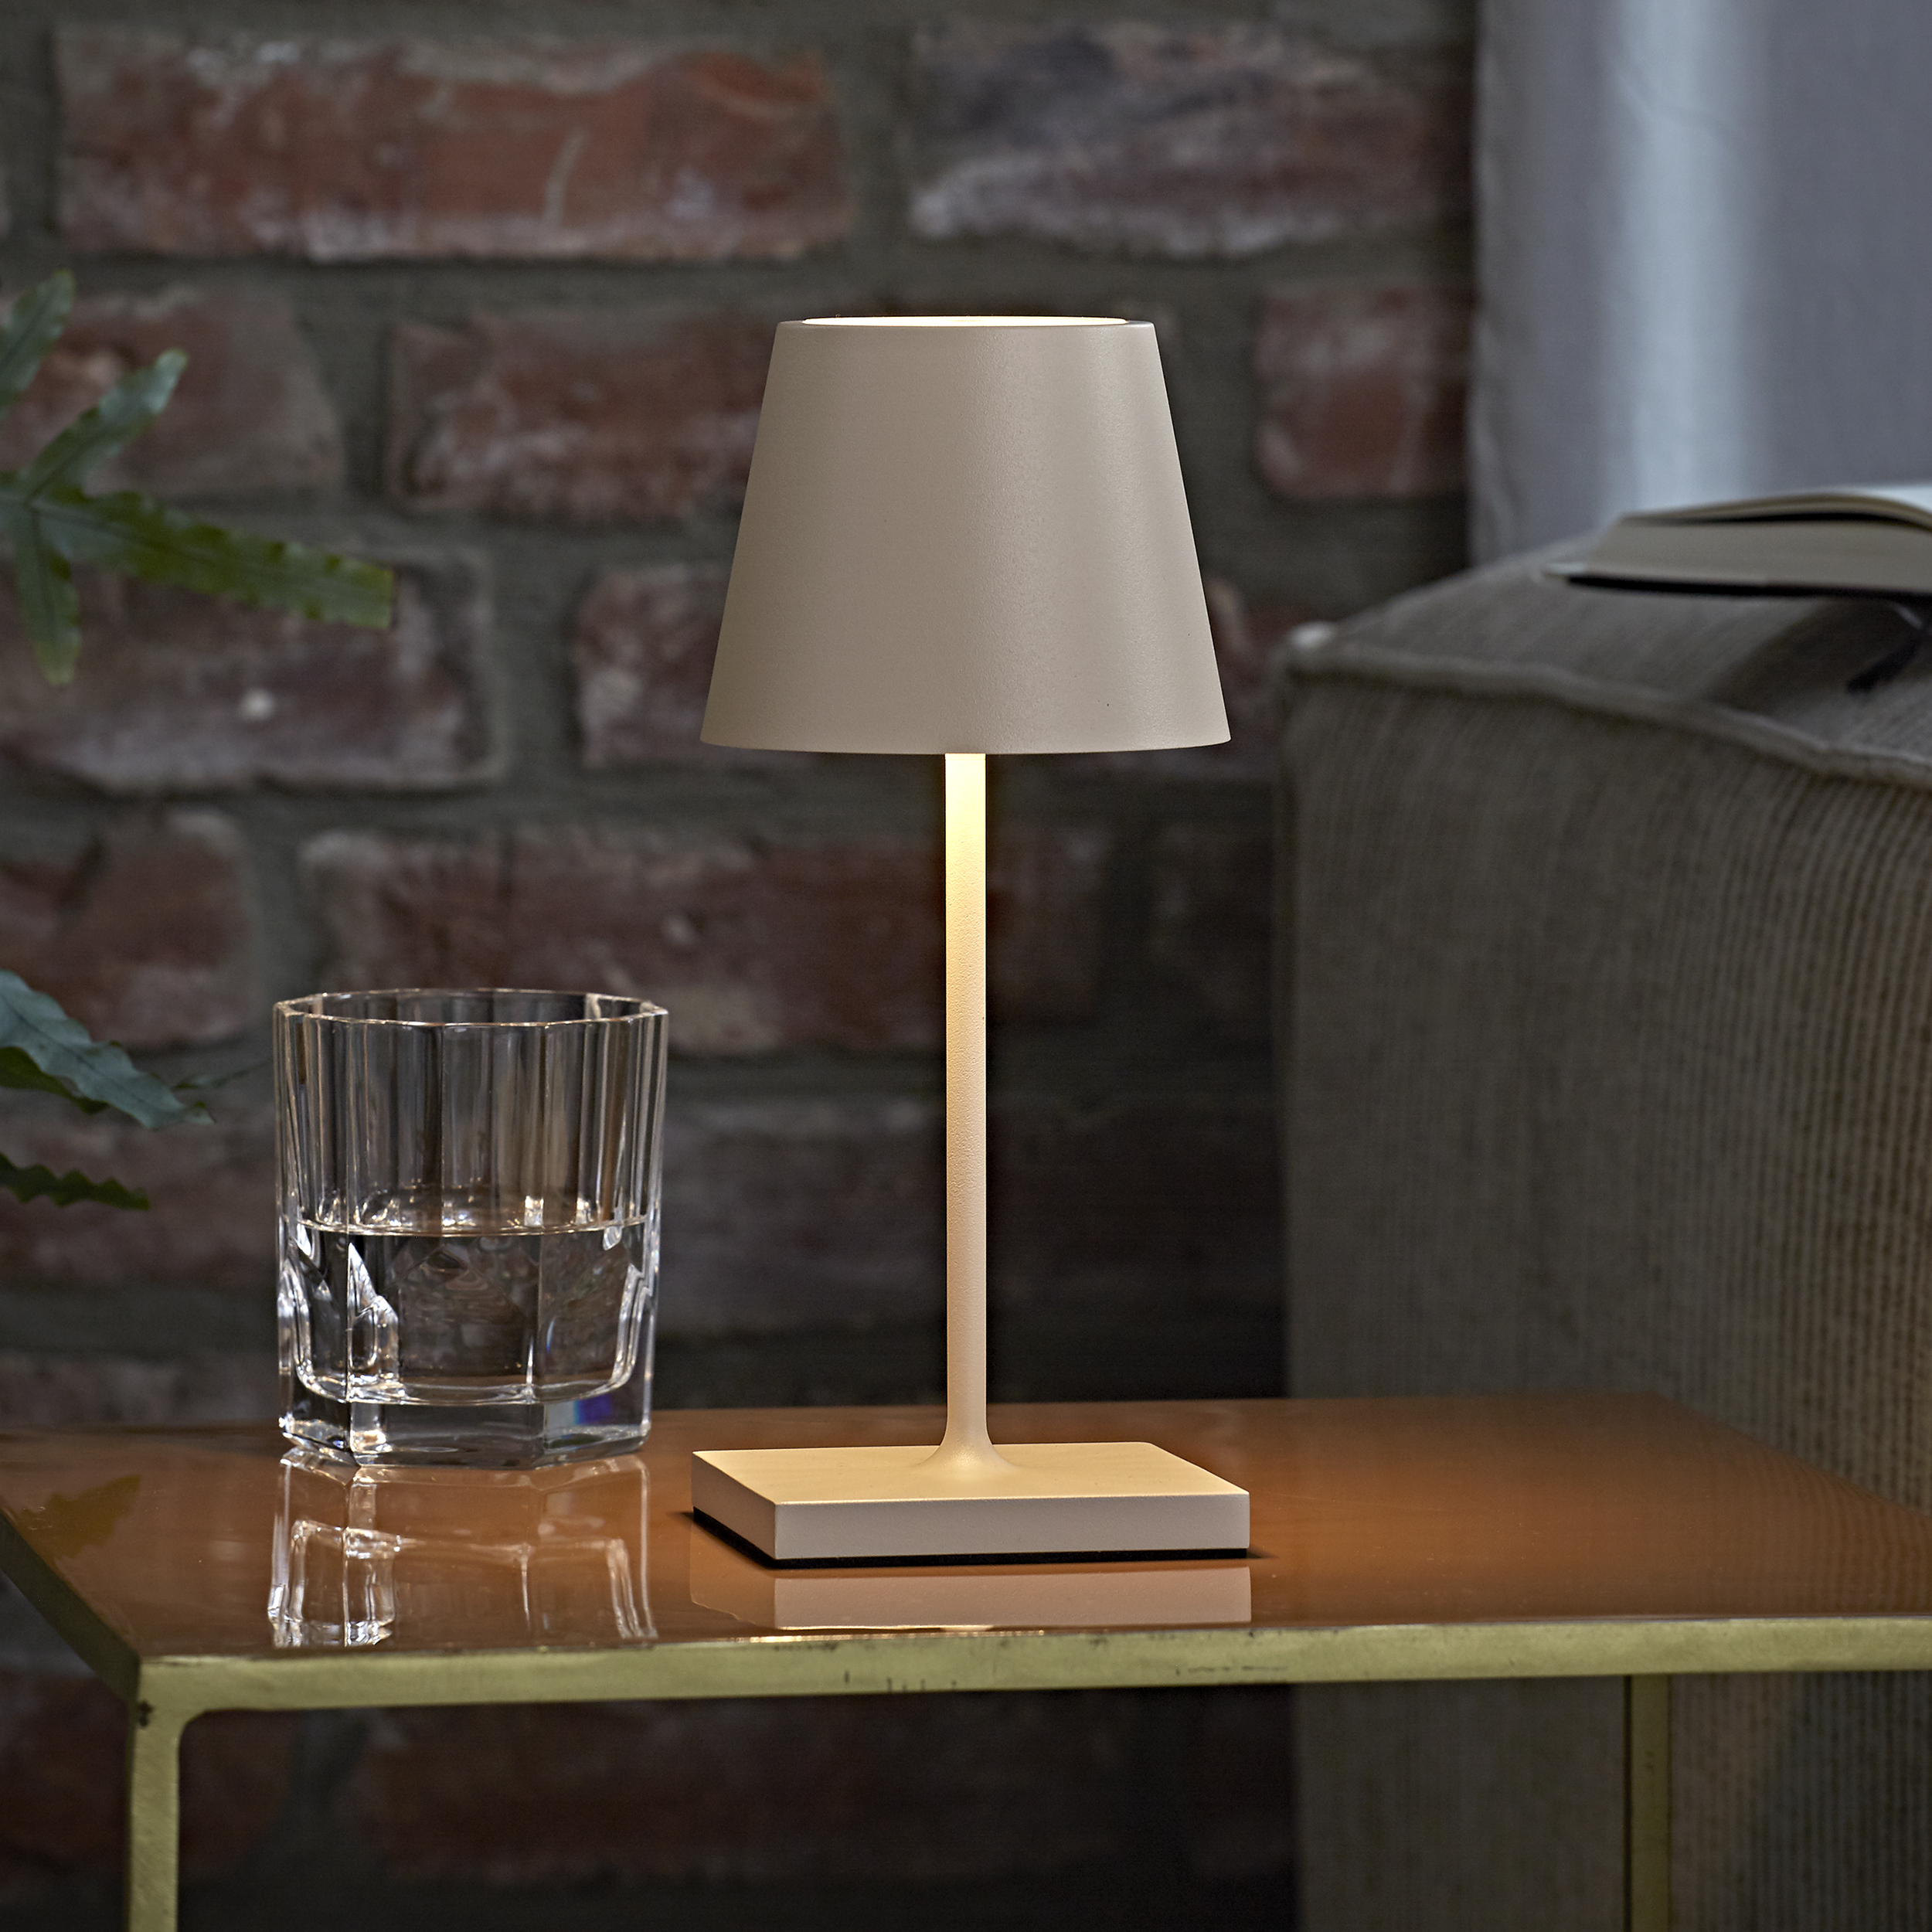 SIGOR NUINDIE Mini Dünenbeige Lamp LED warmweiss Table